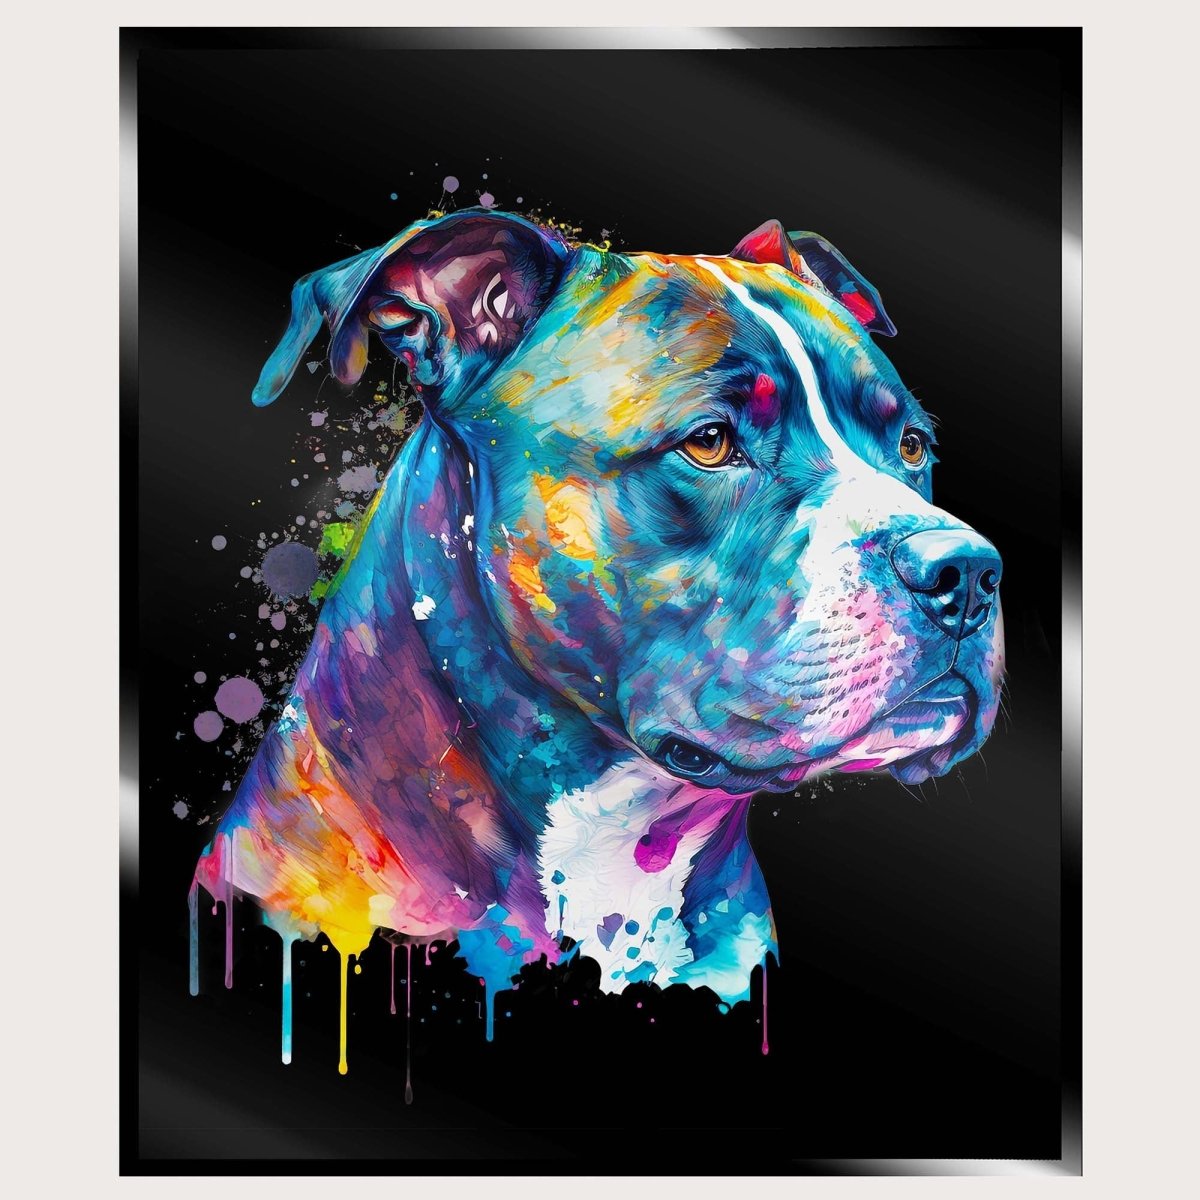 Illuminated Wall Art - Watercoloured Dog - madaboutneon